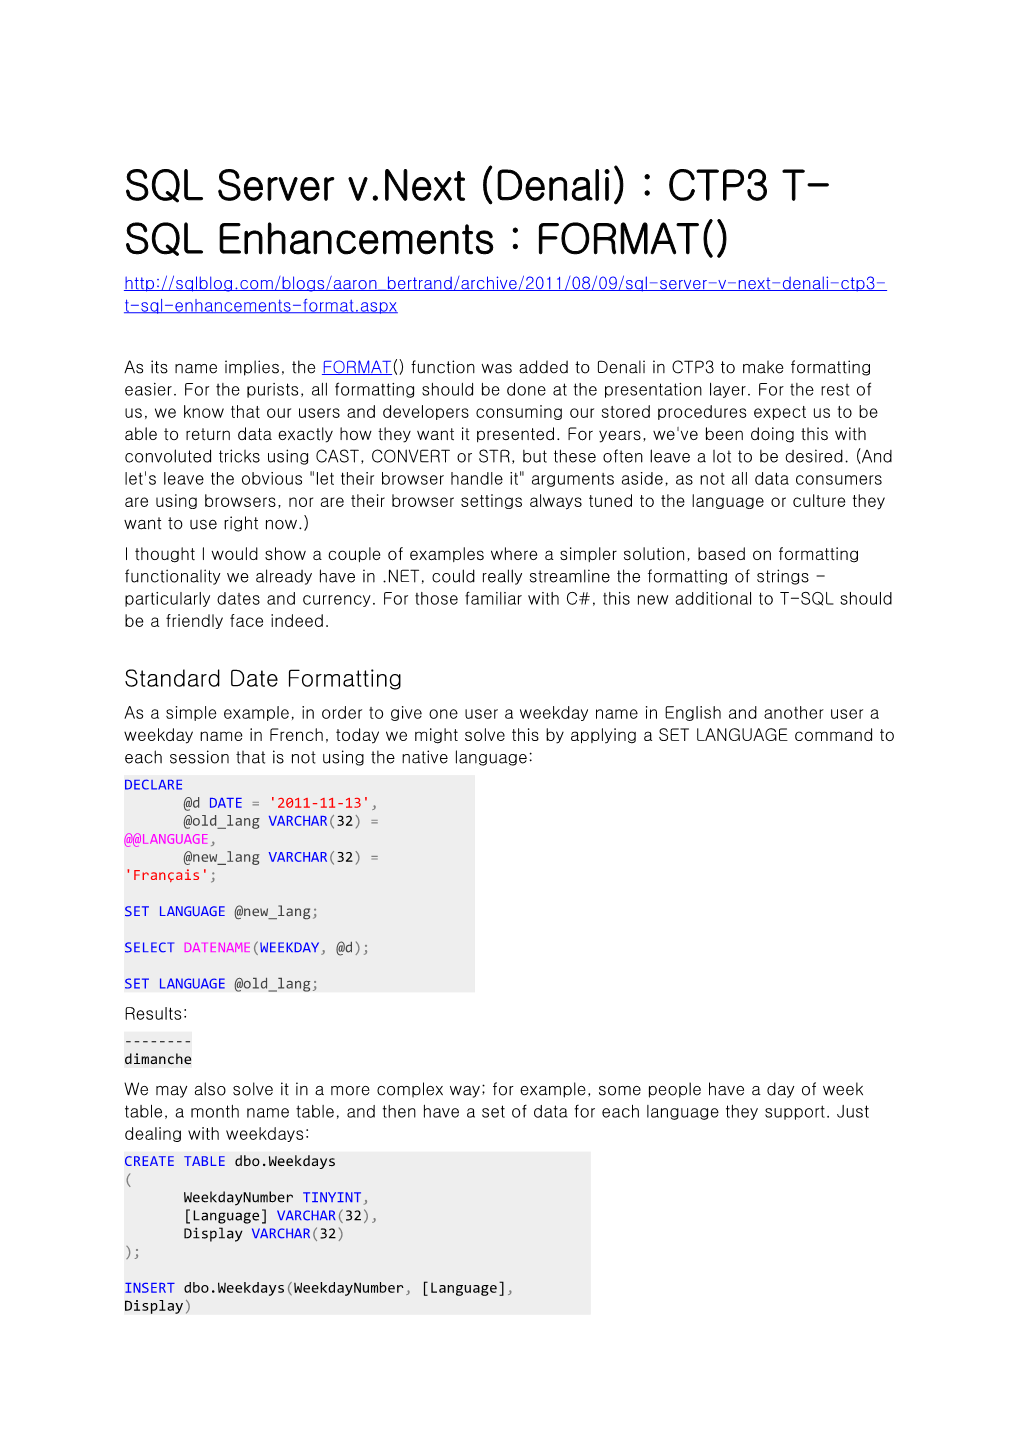 SQL Server V.Next (Denali) : CTP3 T-SQL Enhancements : FORMAT()